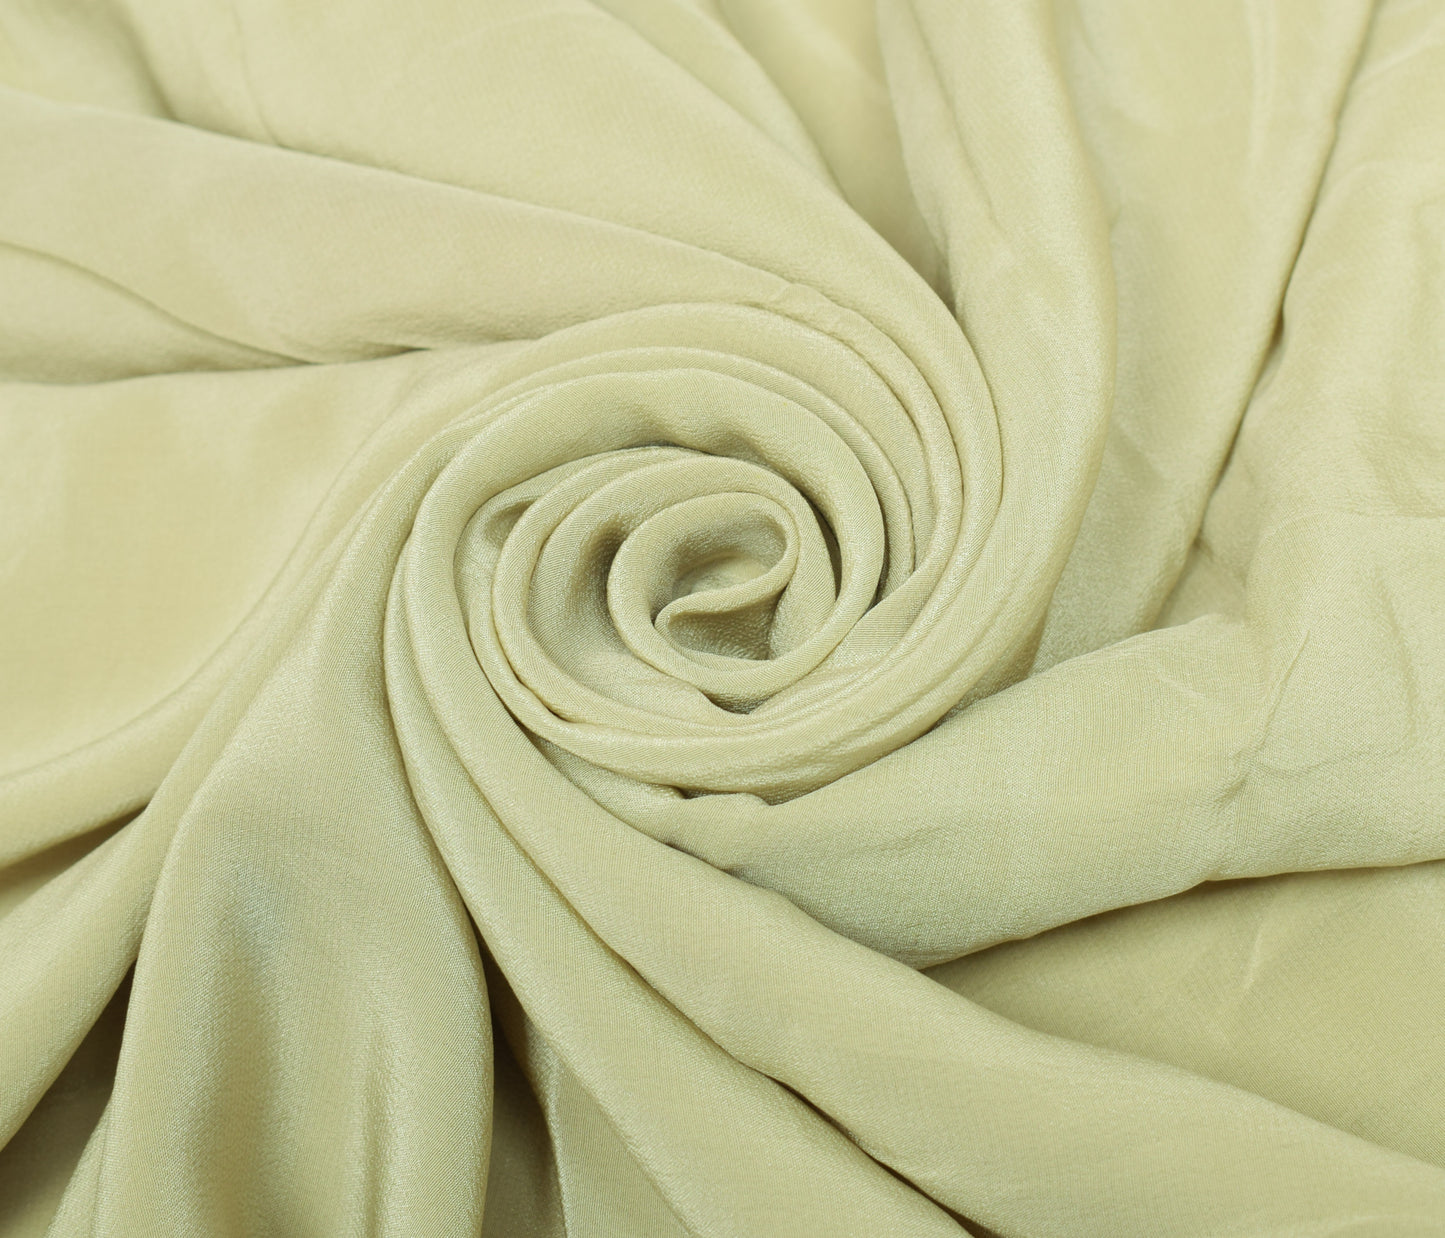 Sushila Vintage Silk Sari Remnant Scrap Multi Purpose Embroidered Craft Fabric